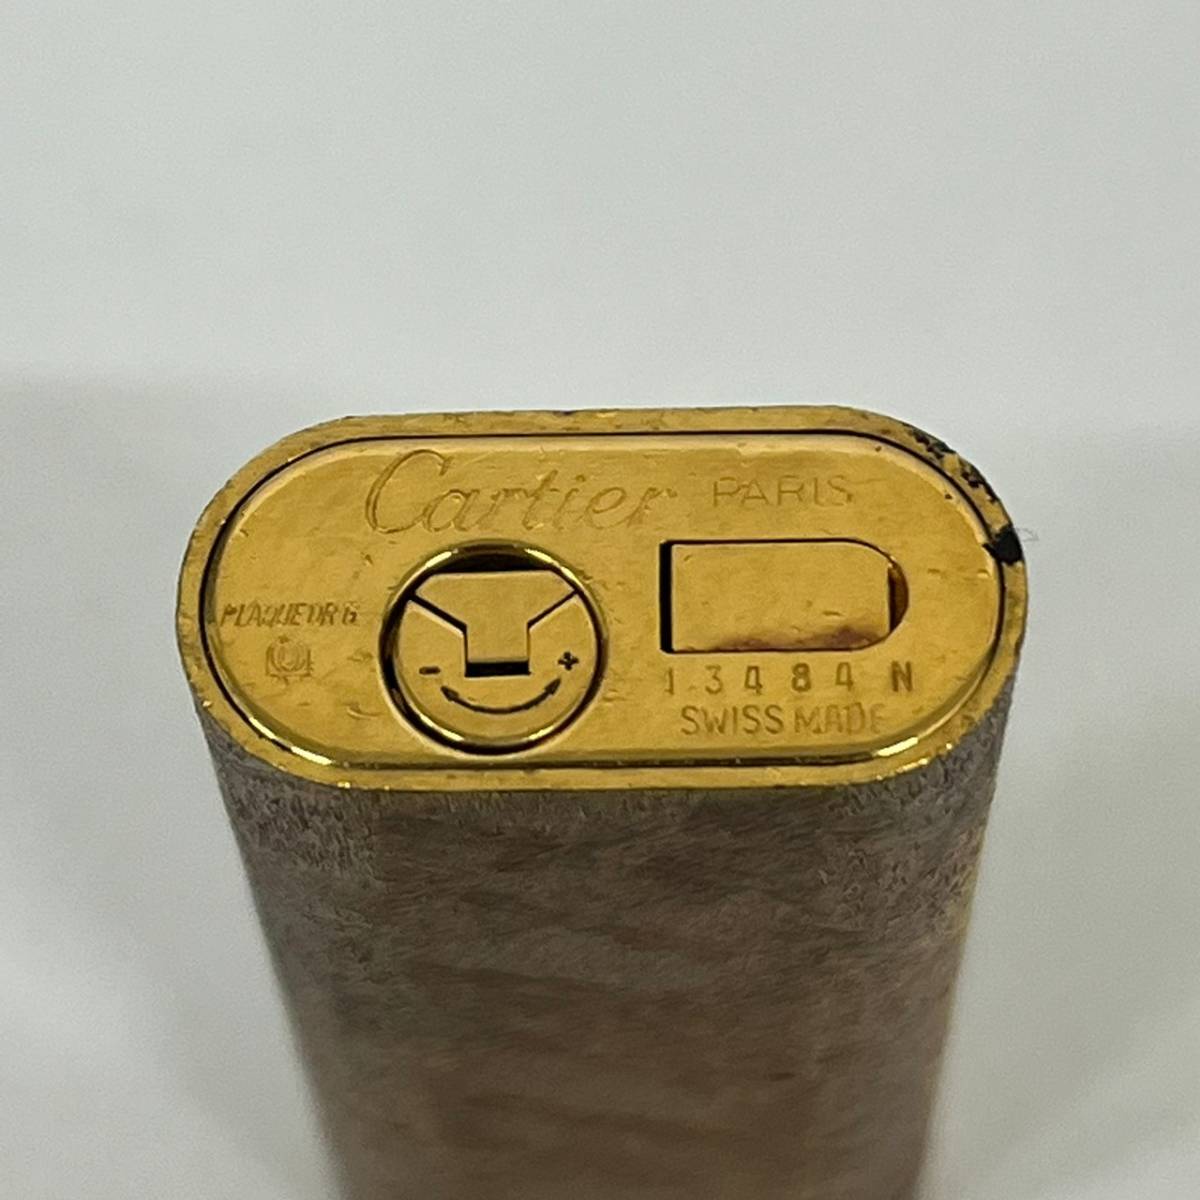 C-14991 Cartier カルティエ ブランド ガスライター 金色 喫煙具 保管 